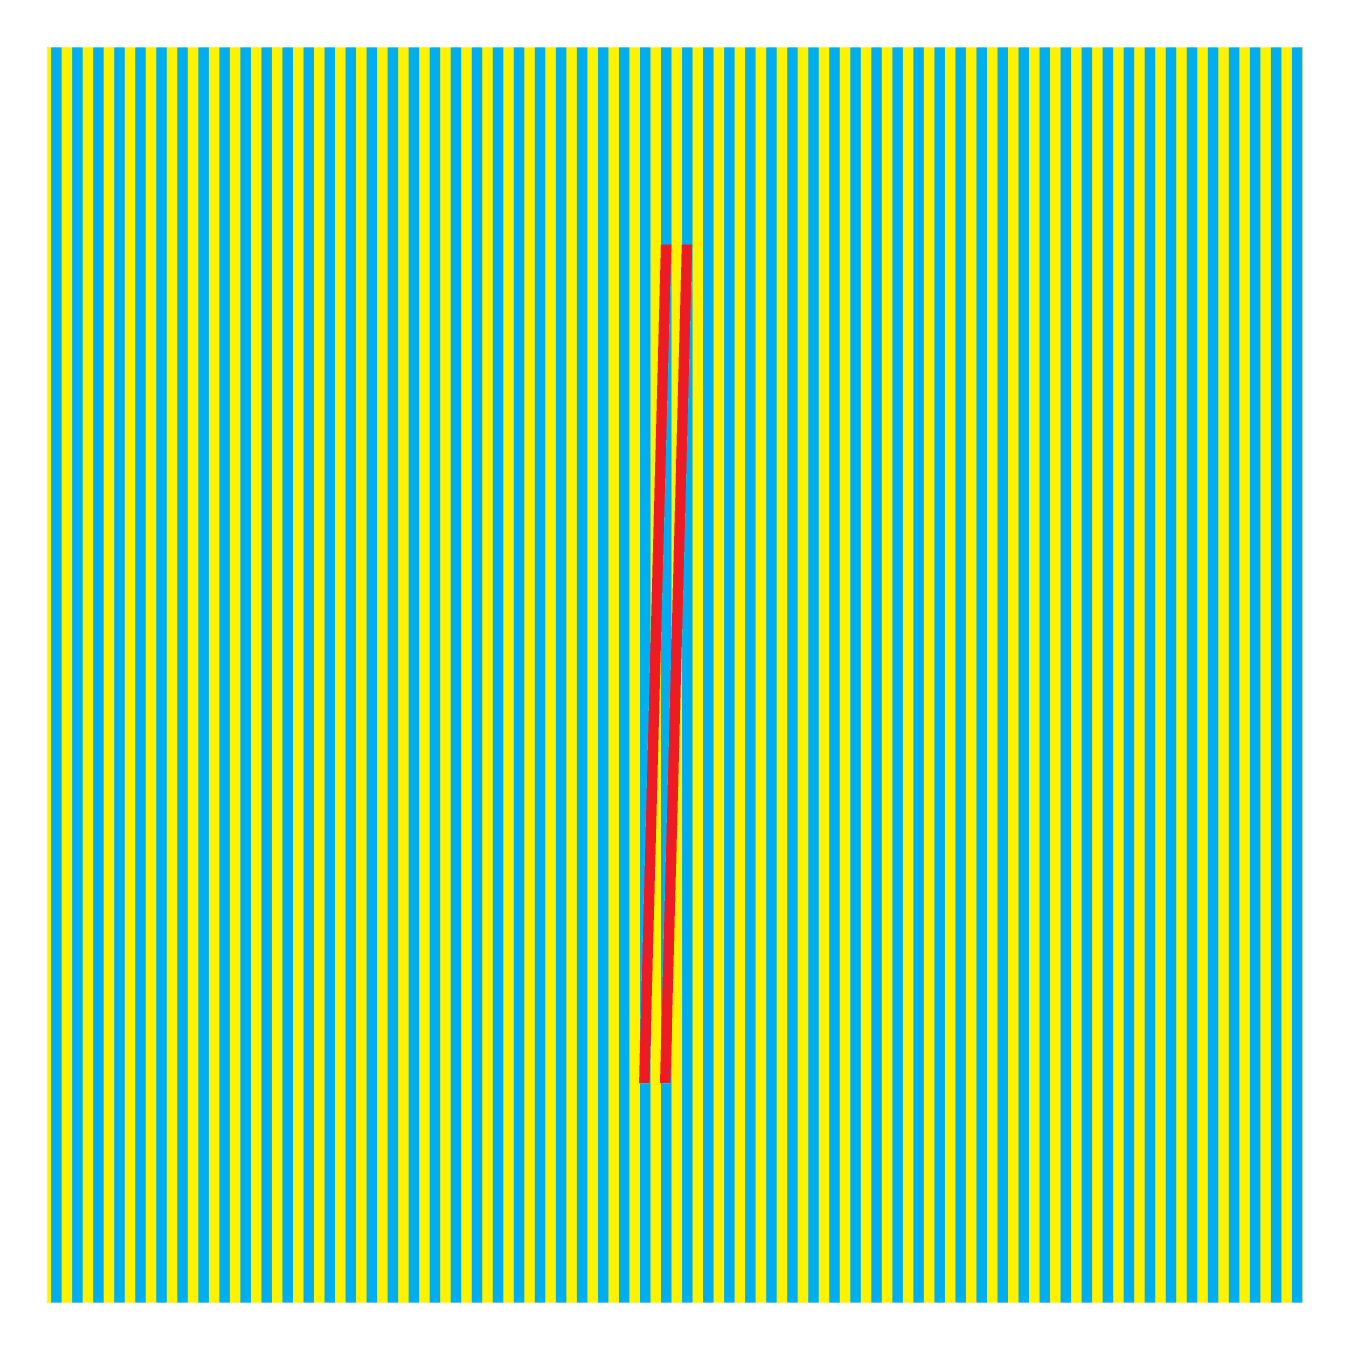 Interactive colors, Tow lines spectrum 2